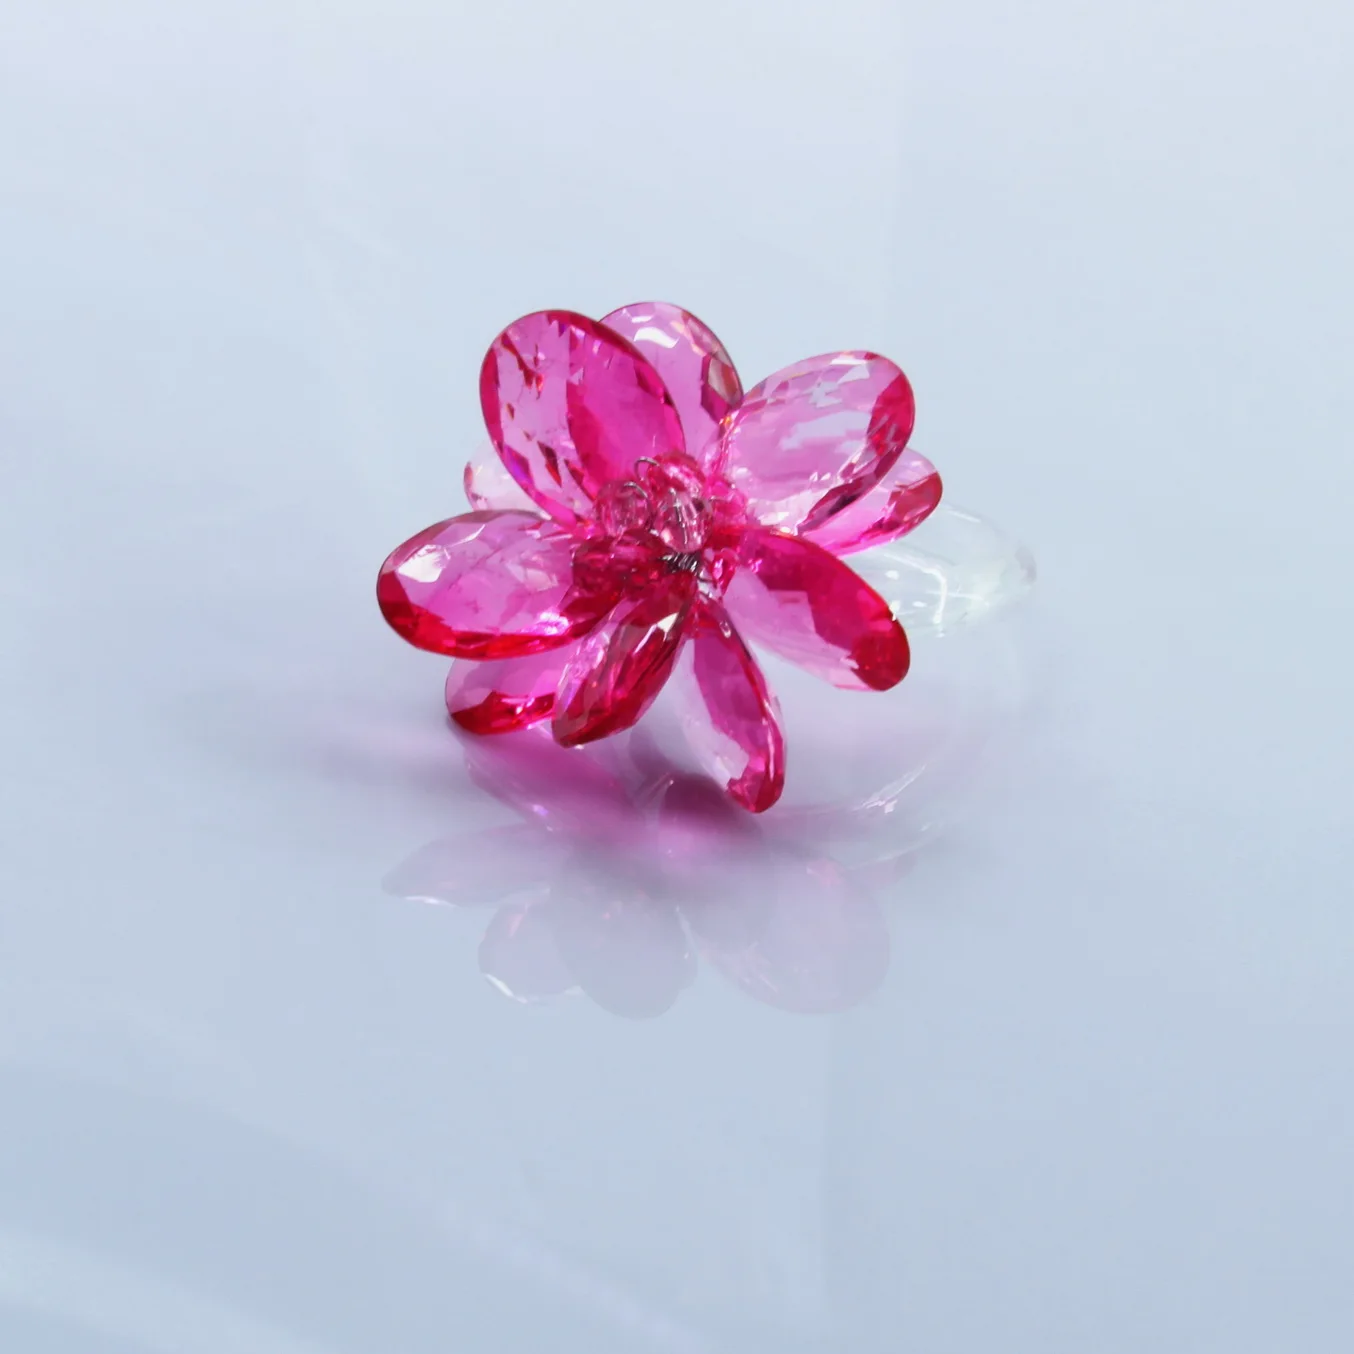 guardanapo anel florido frete flores para casamento muitas cores peças